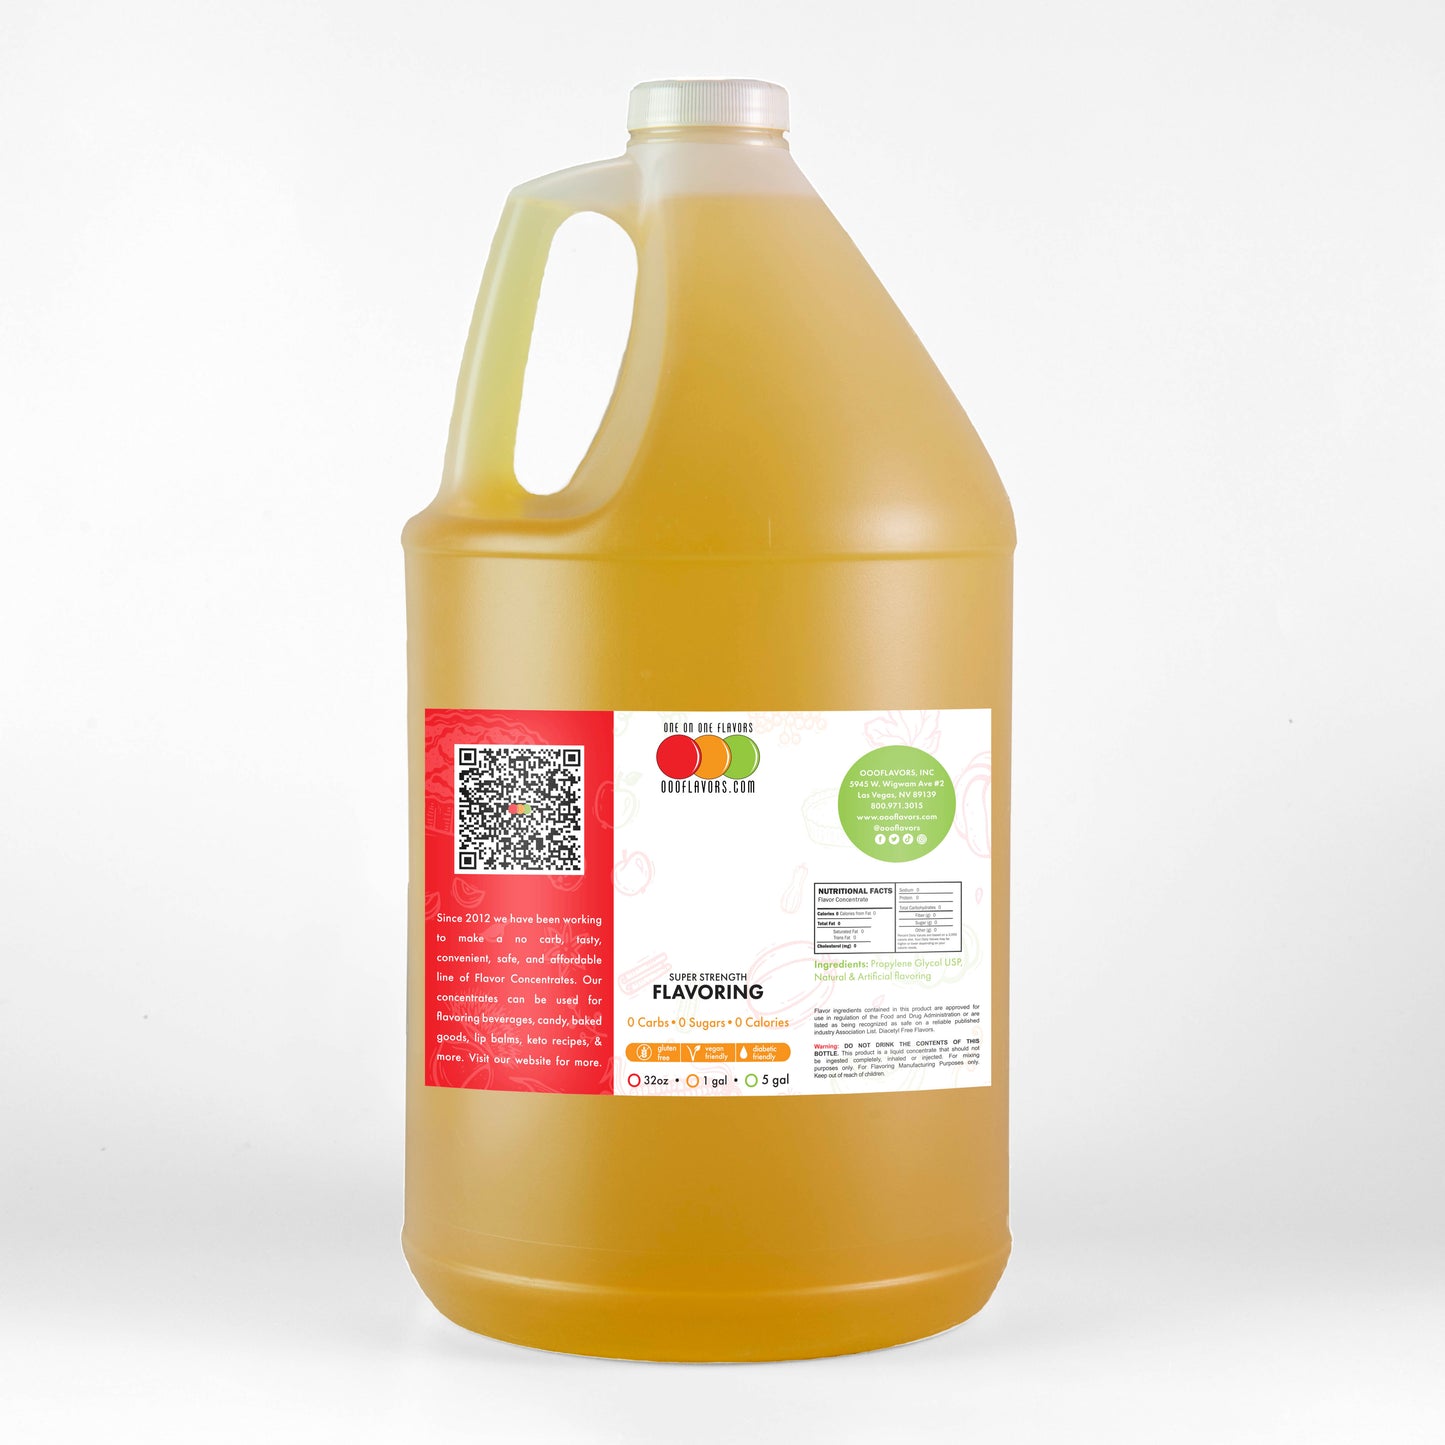 Papaya (VG) Flavored Liquid Concentrate